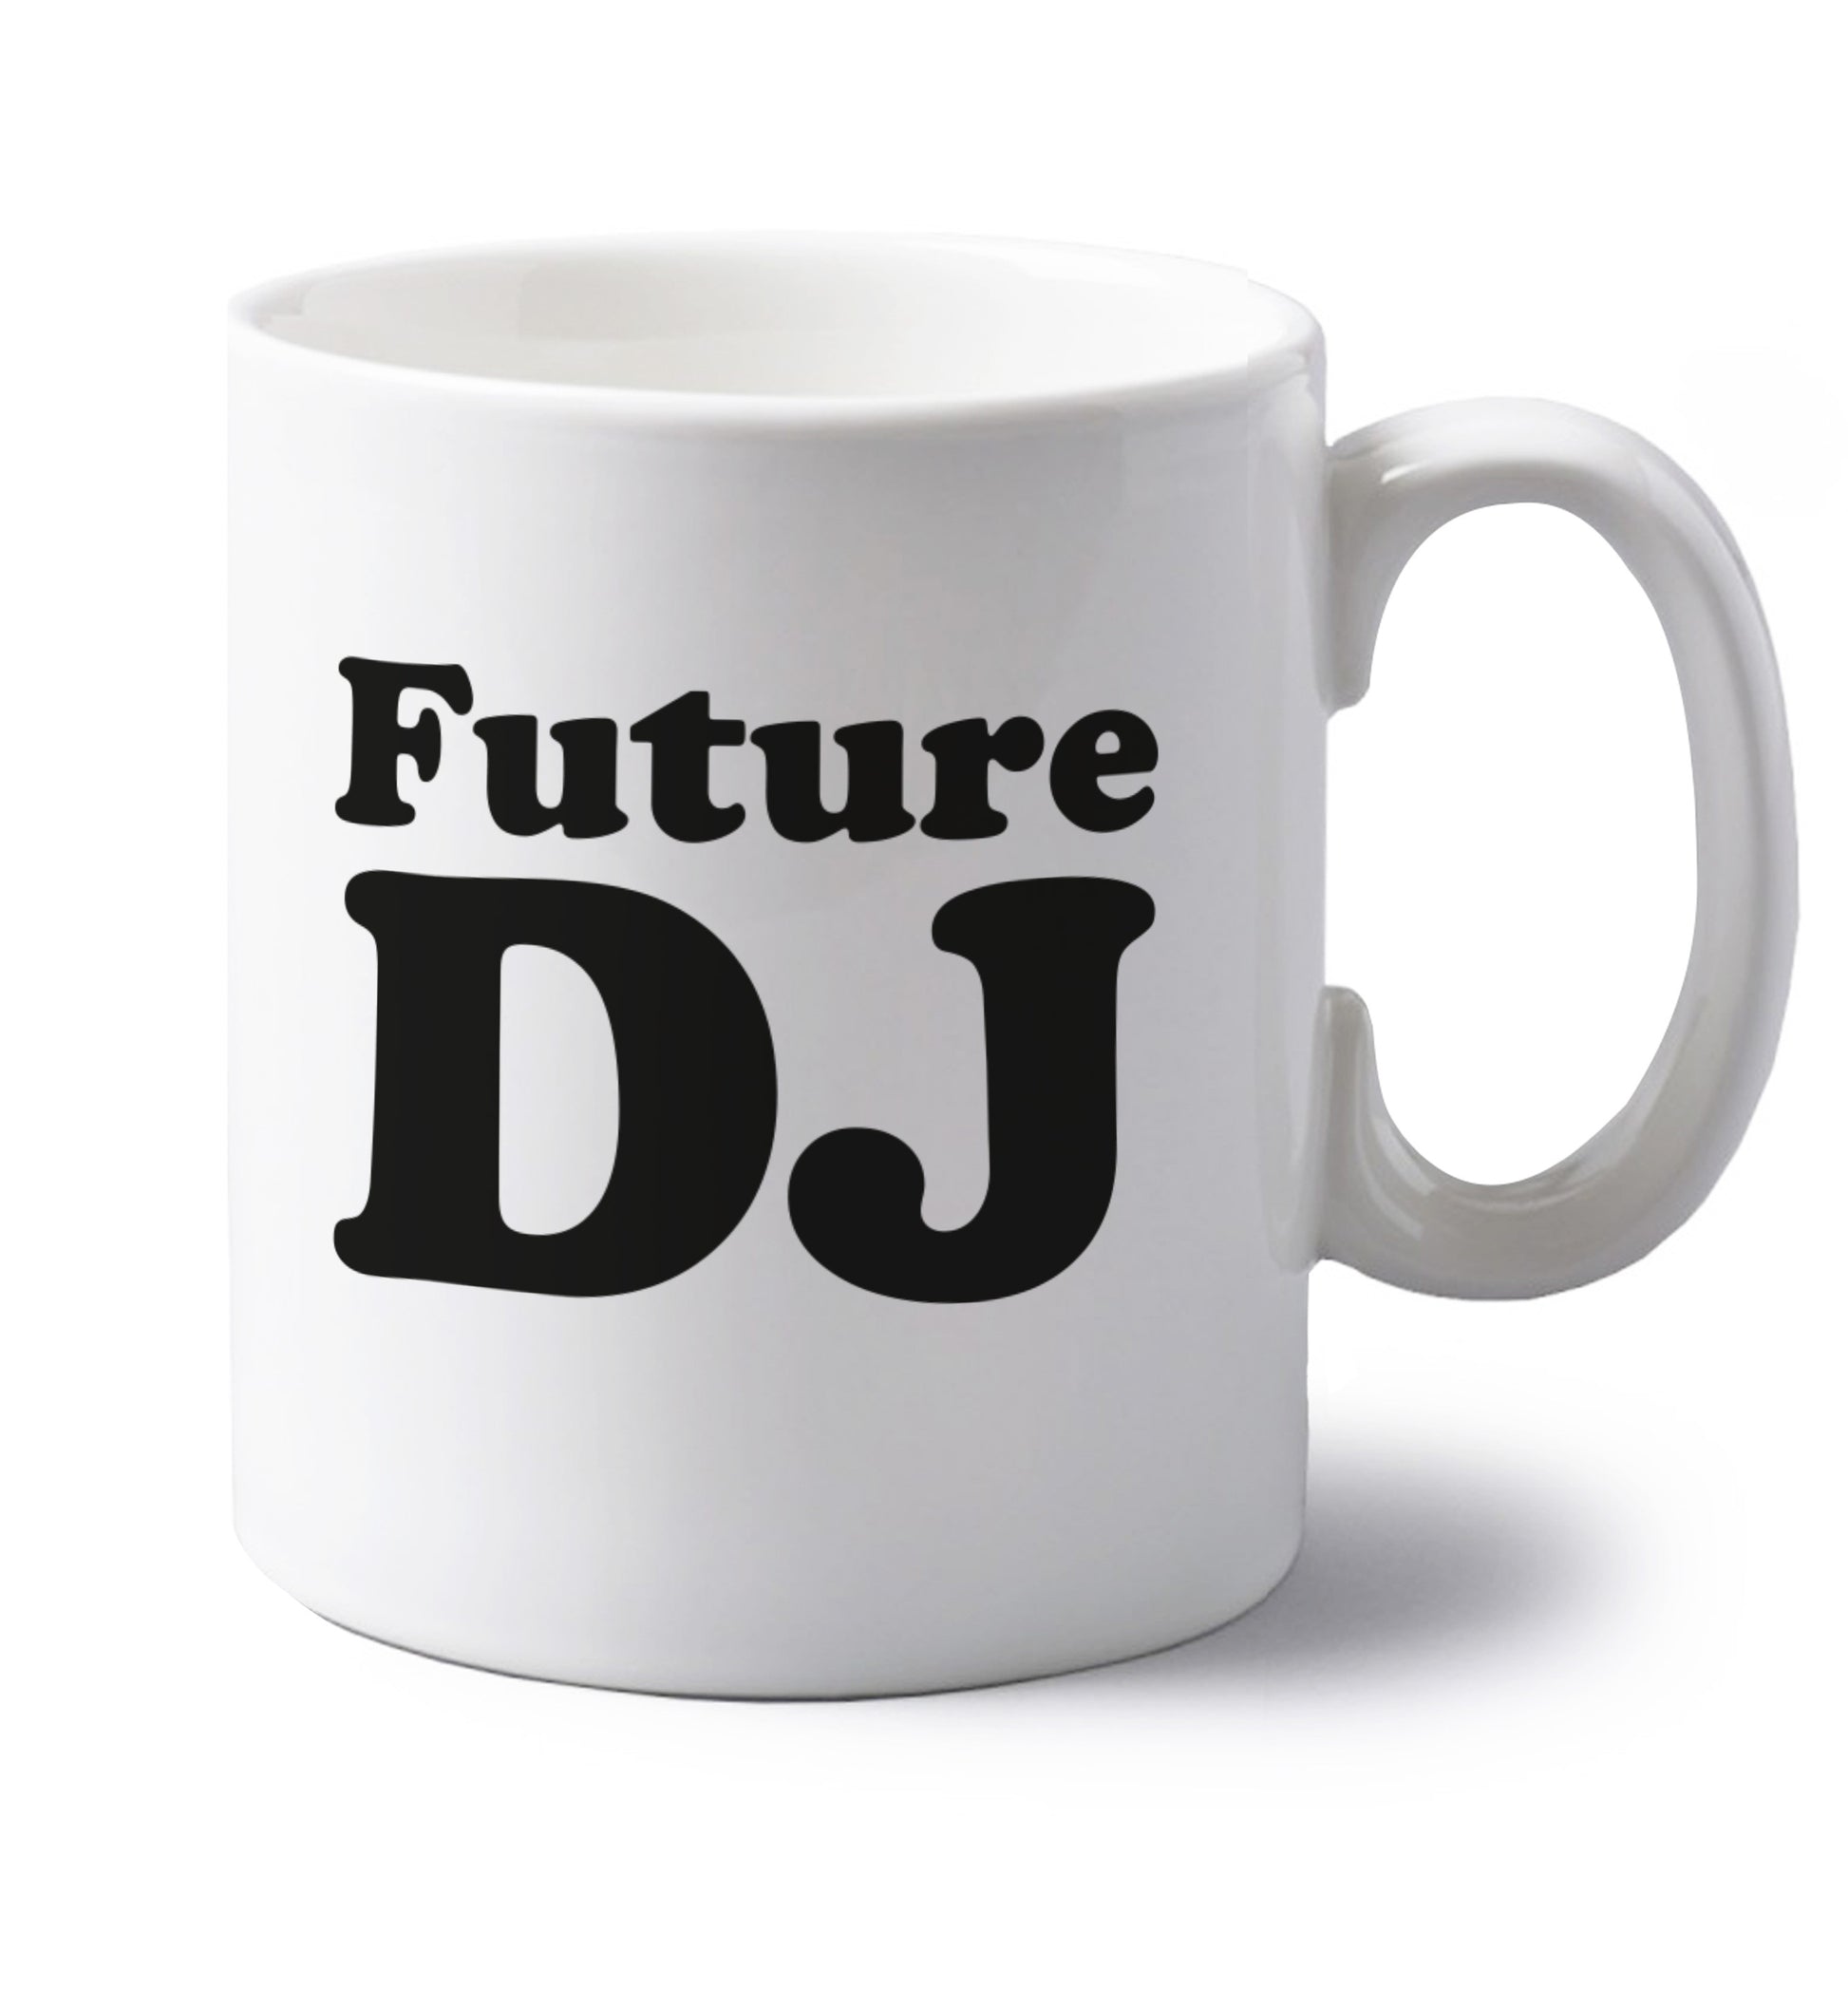 Future DJ left handed white ceramic mug 